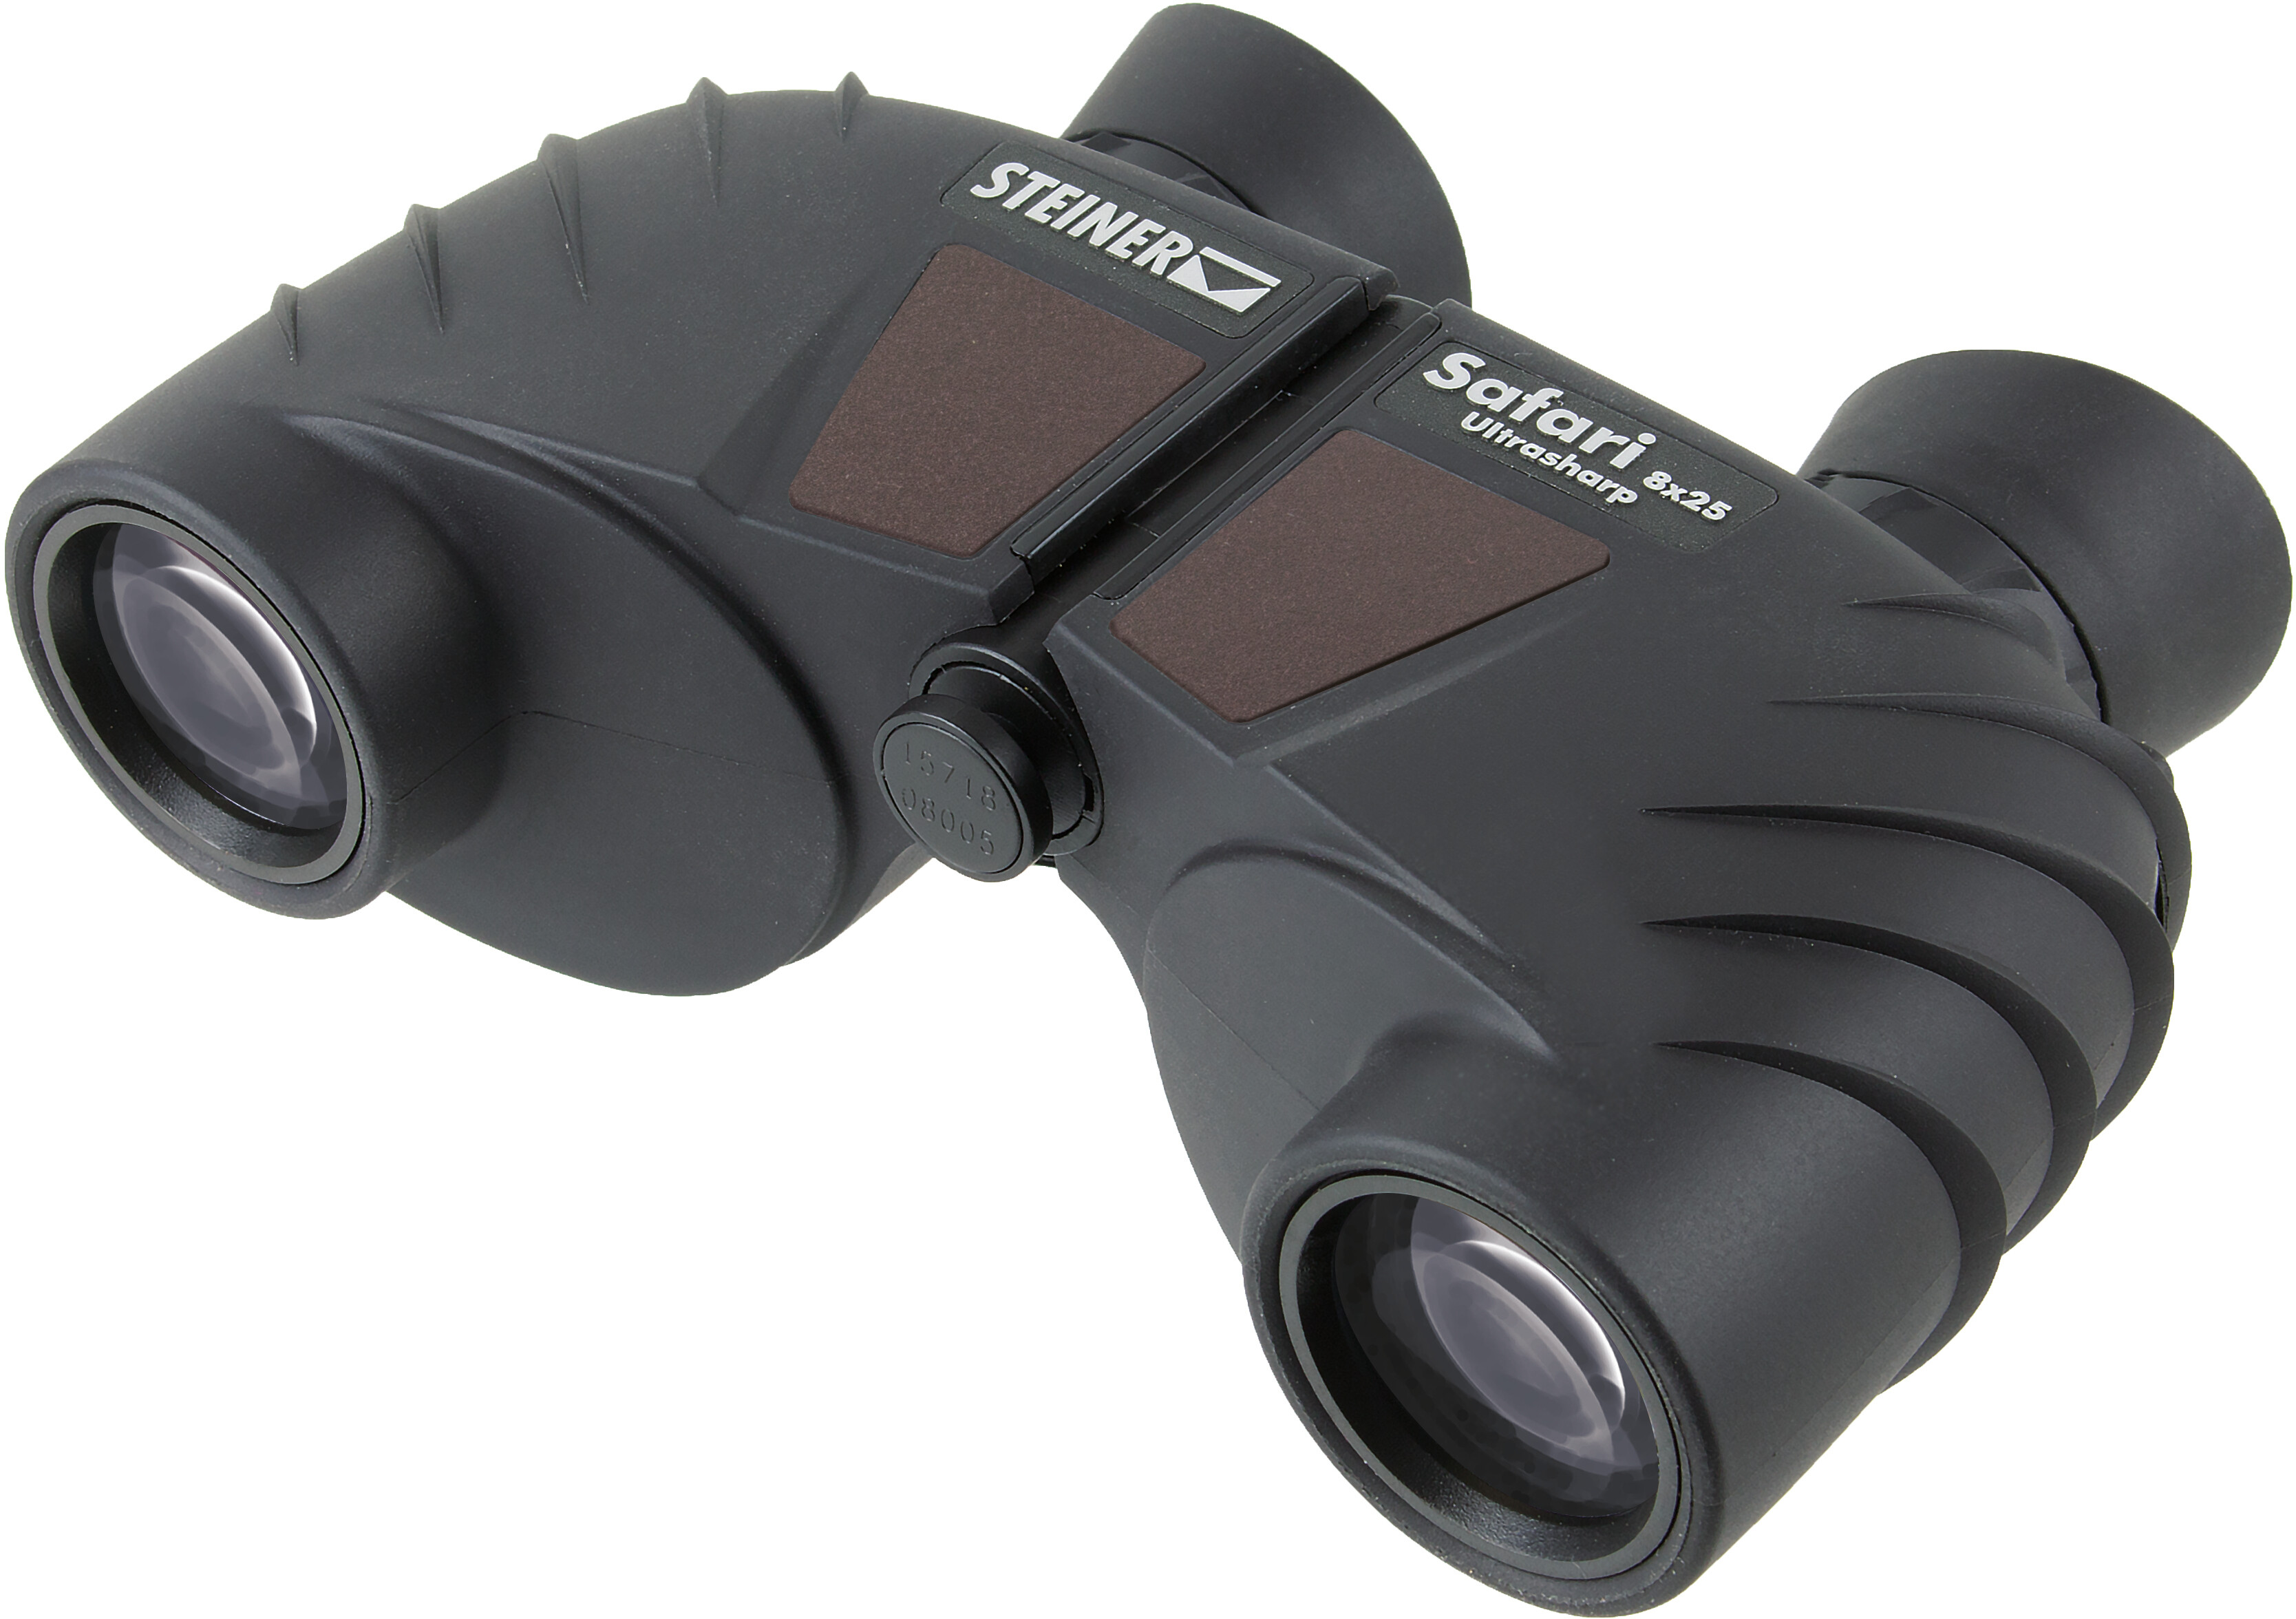 Steiner safari binoculars